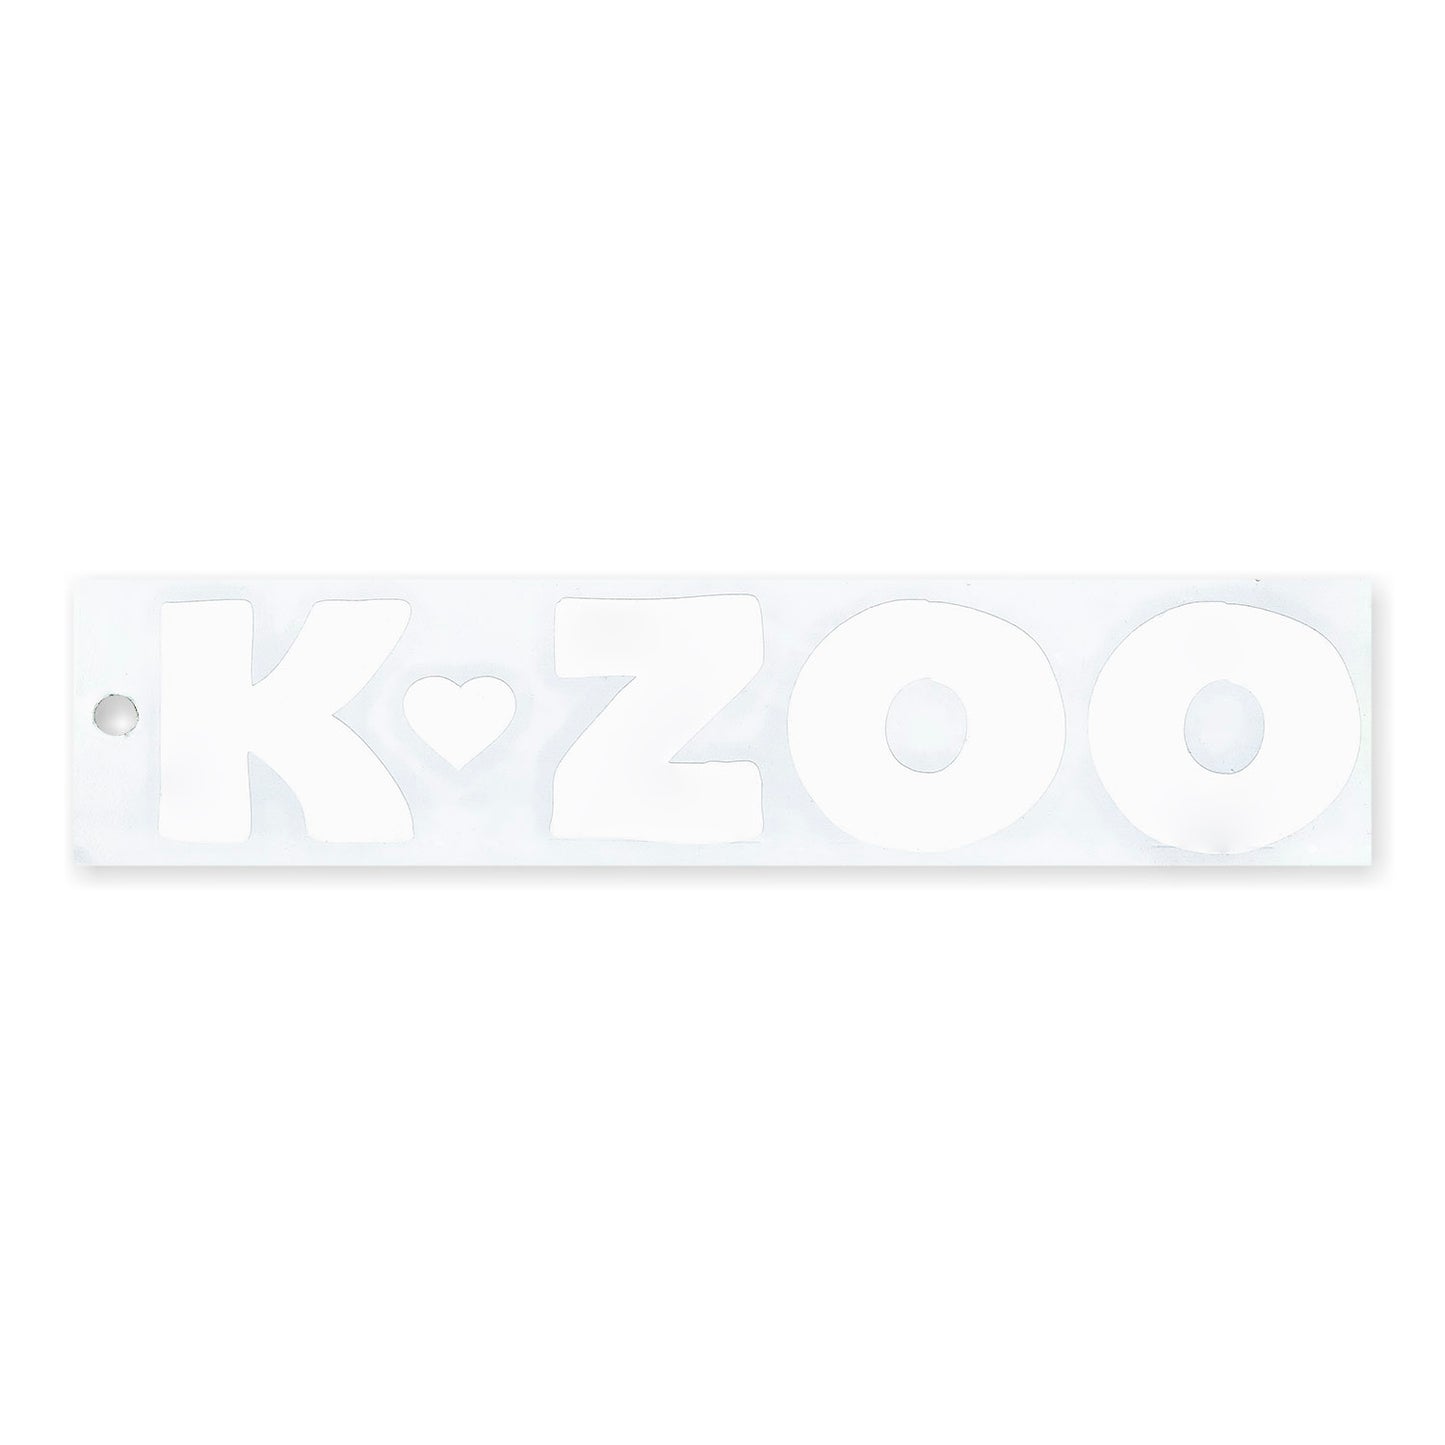 K Zoo Decal